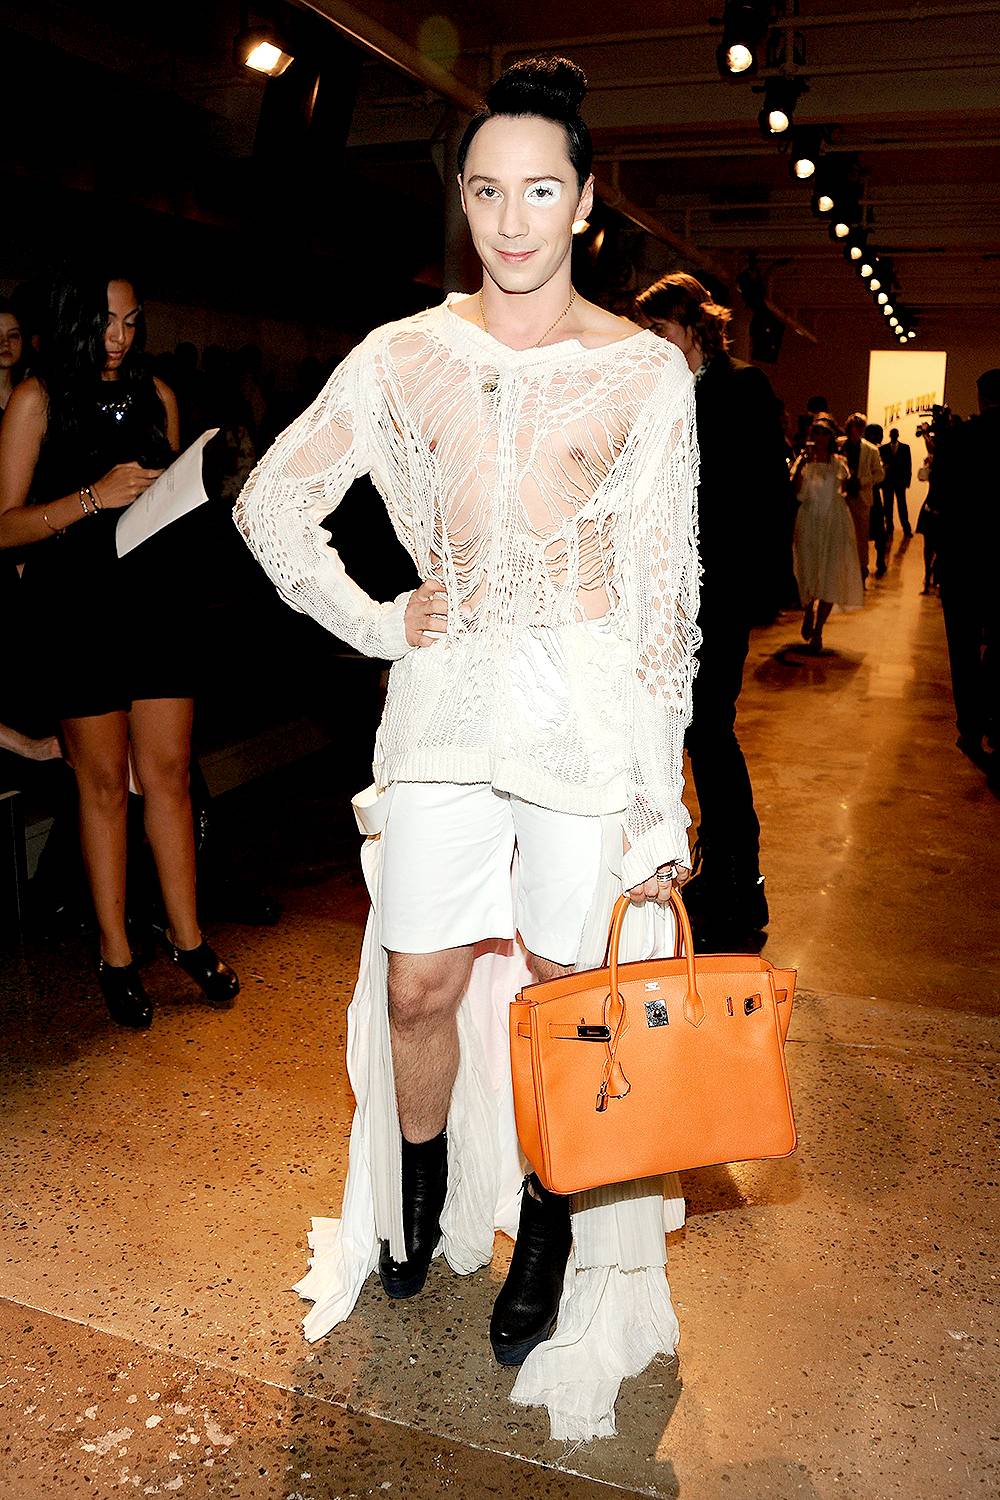 Jaden Smith Blurs Gender Lines, Stars in Louis Vuitton Womenswear Campaign